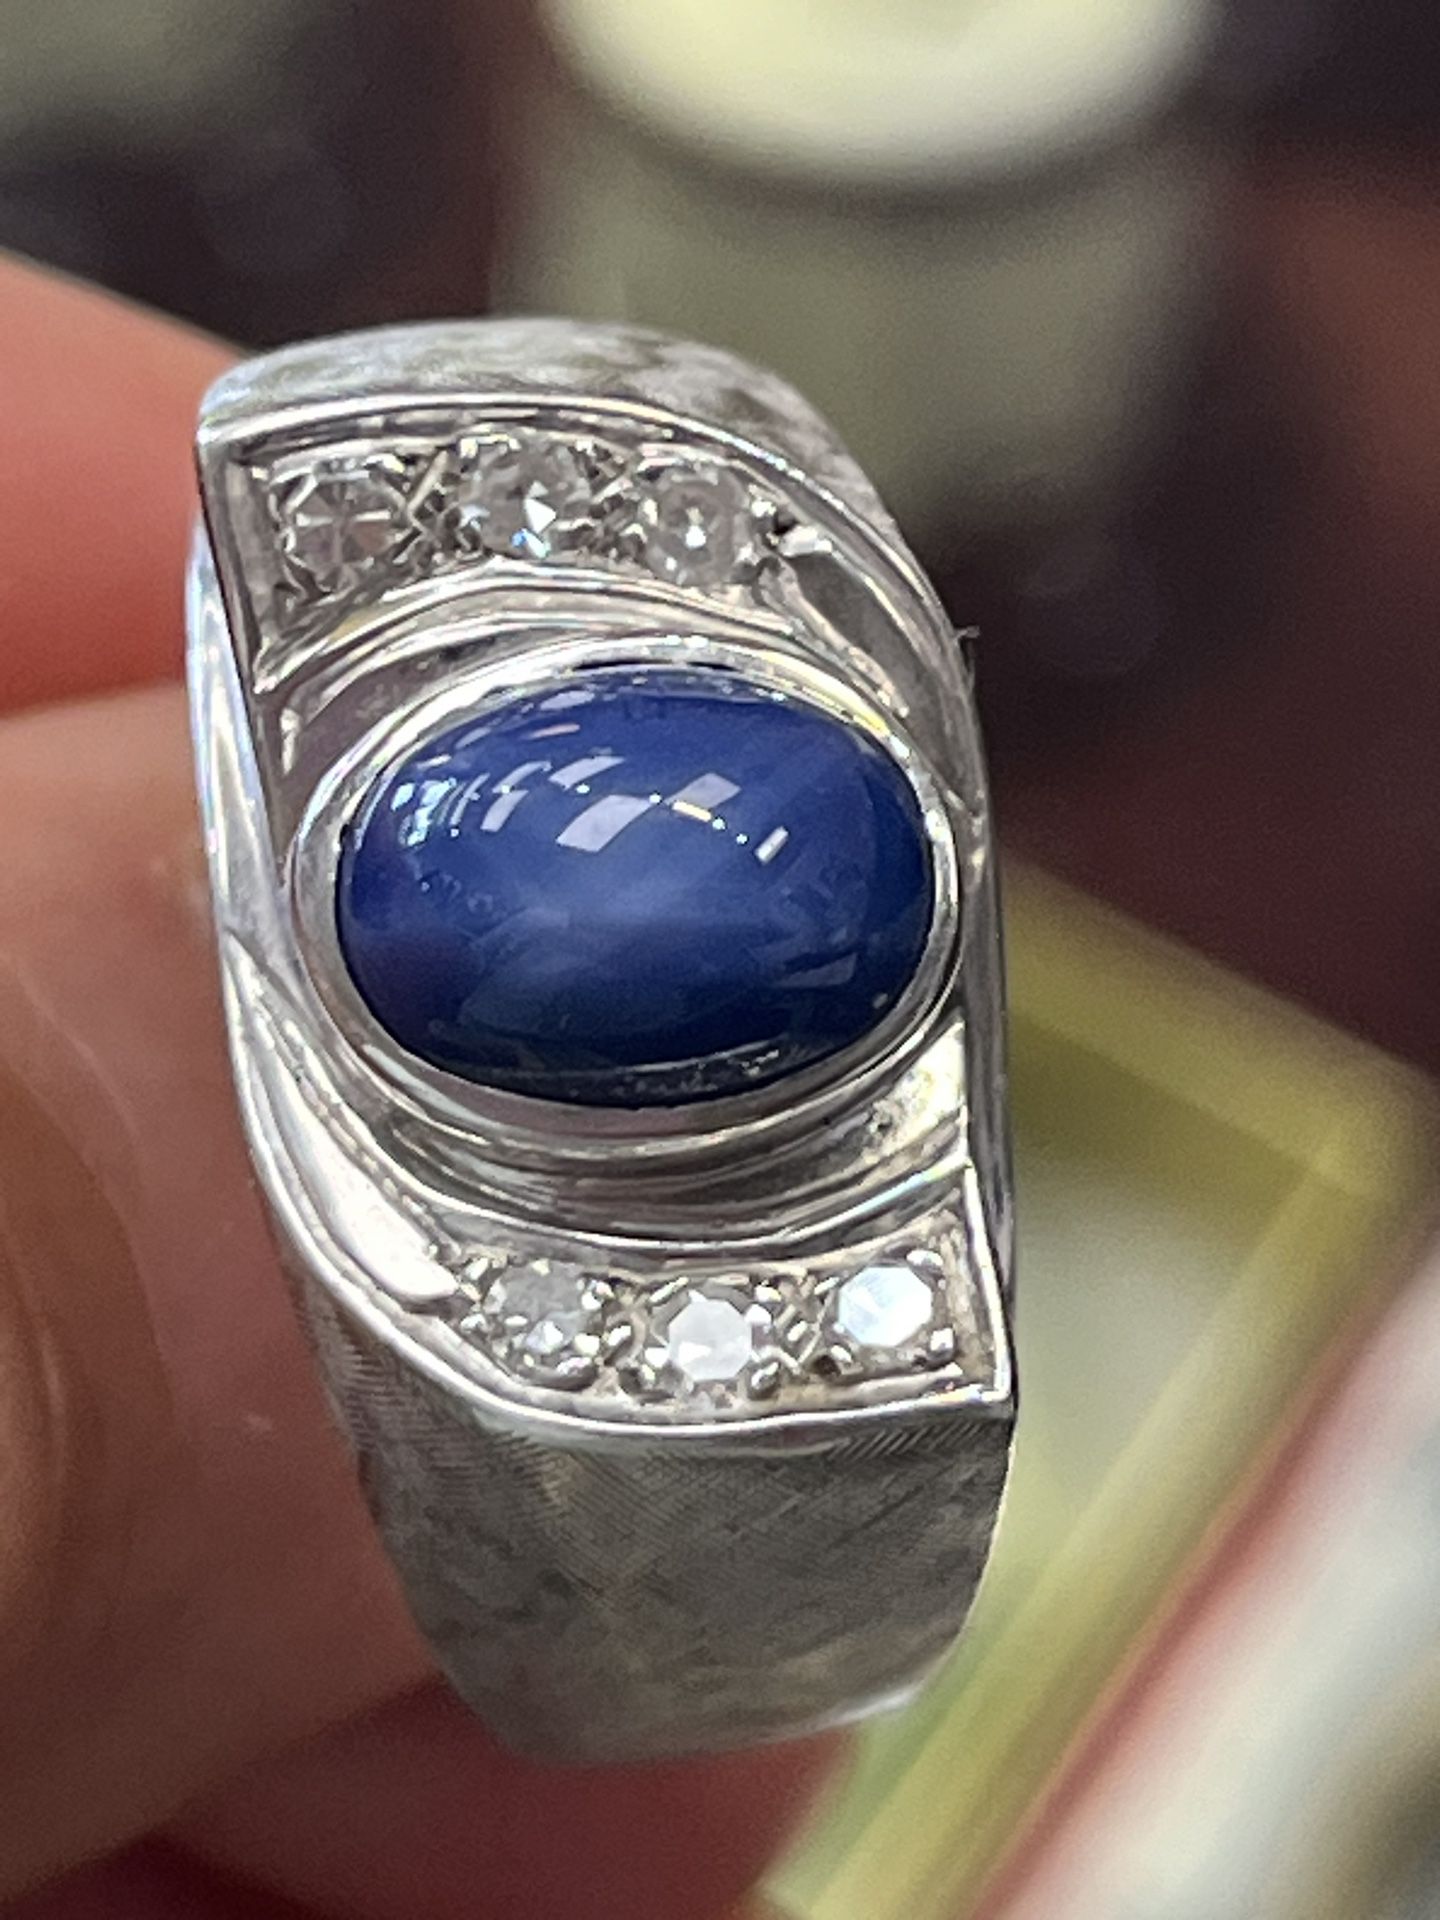 14k Blue Star Sapphire Diamond Ring 10g